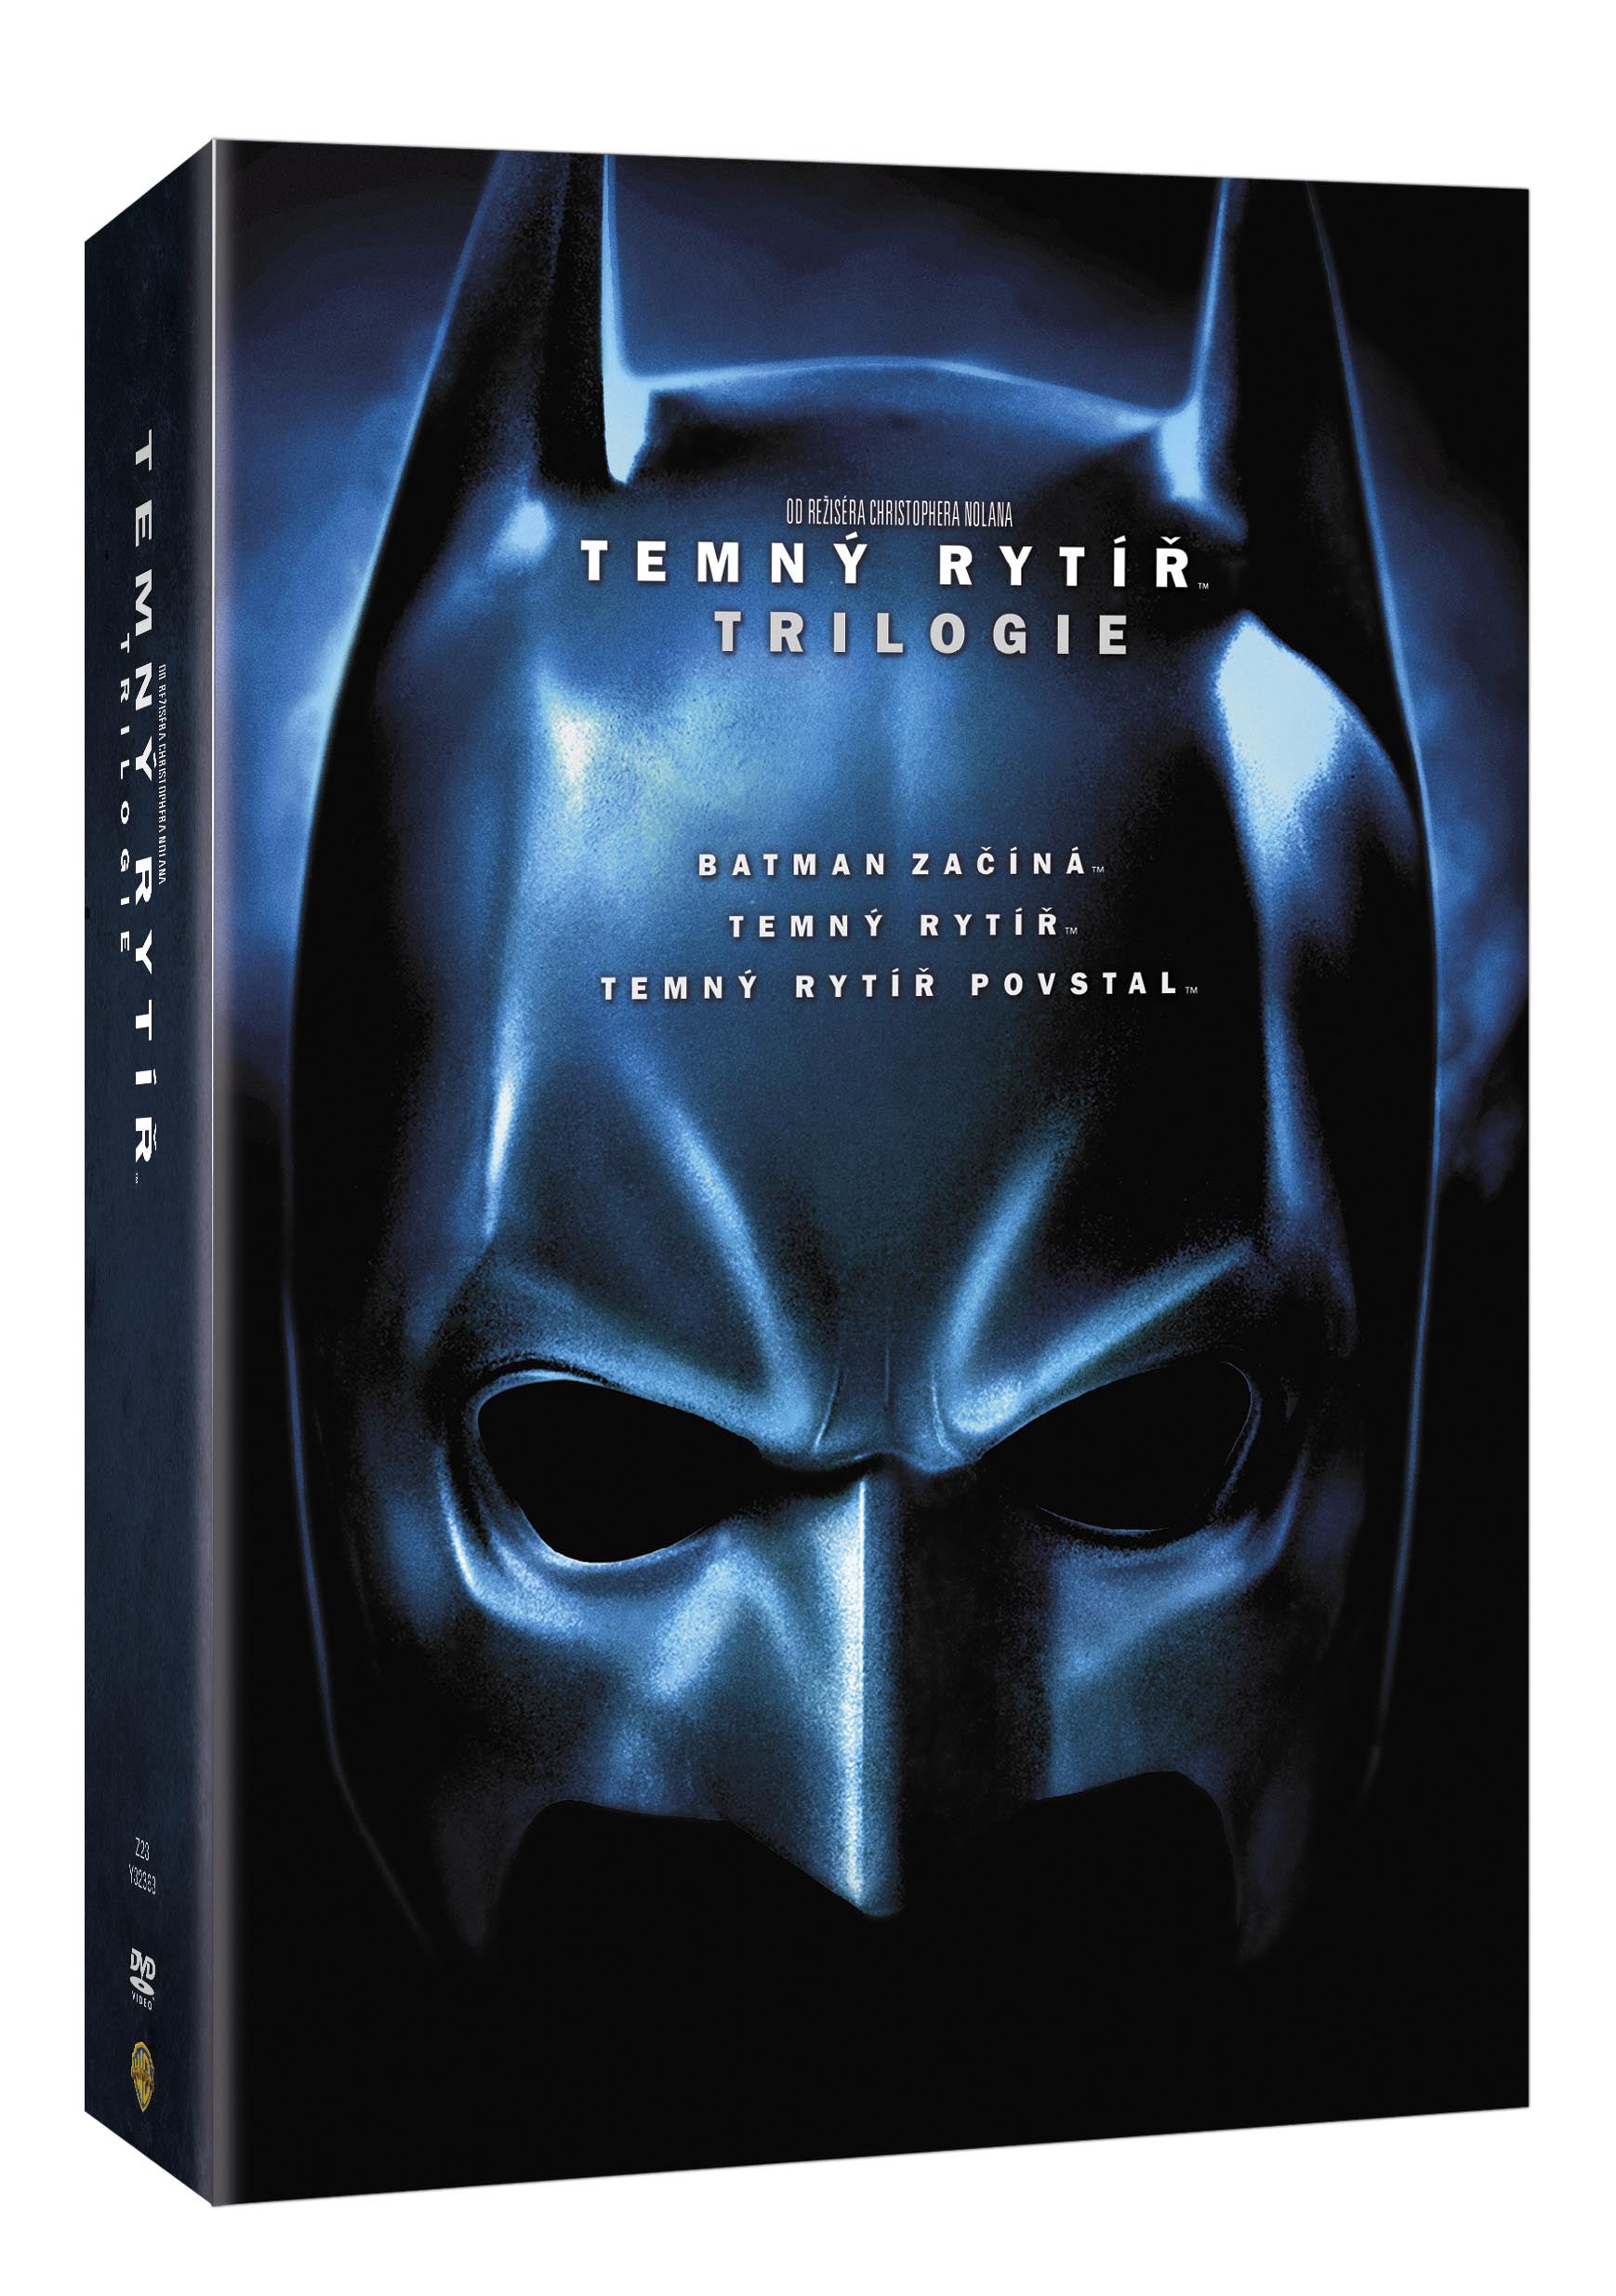 Temny Rytir Trilogie 6DVD / Dark Knight Trilogie 6DVD